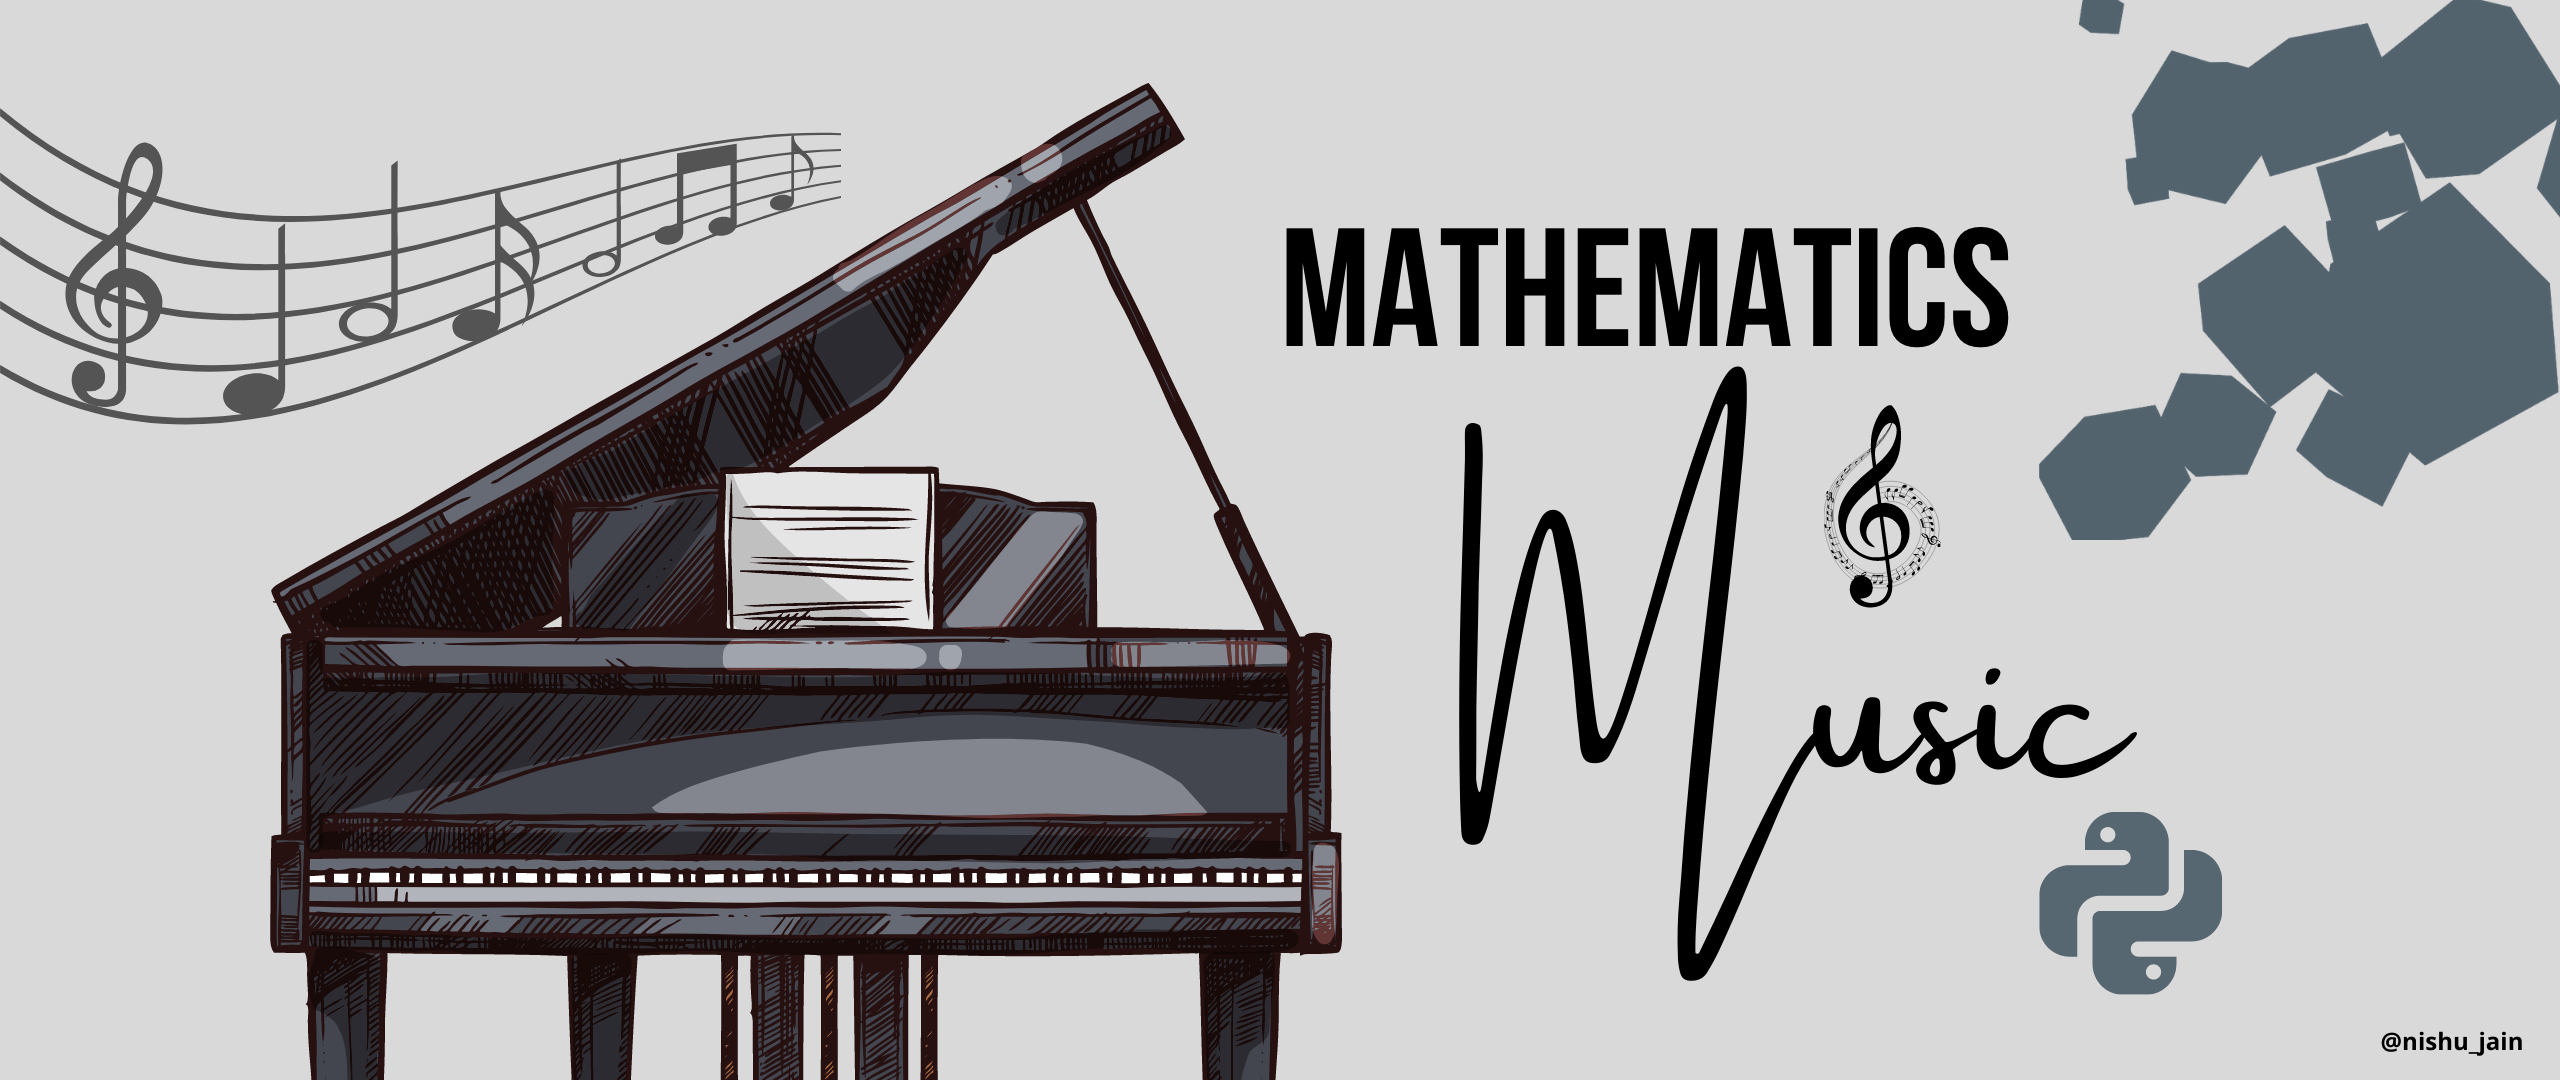 How To Play Music Using Mathematics In Python By Nishu Jain Towards Data Science - mrbeast song remix roblox piano